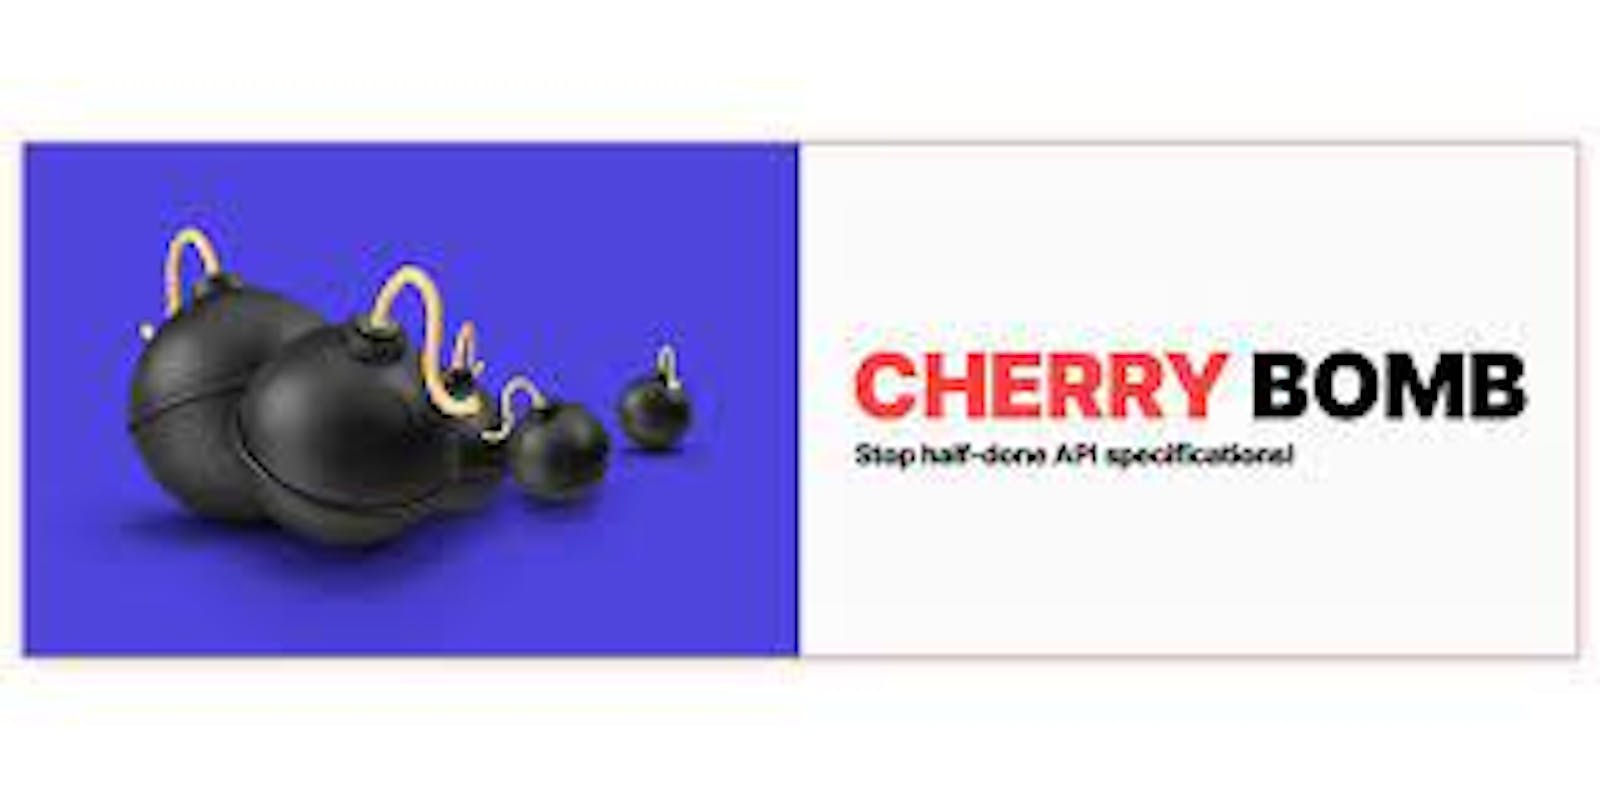 Cherrybomb - Stop half-done API specifications